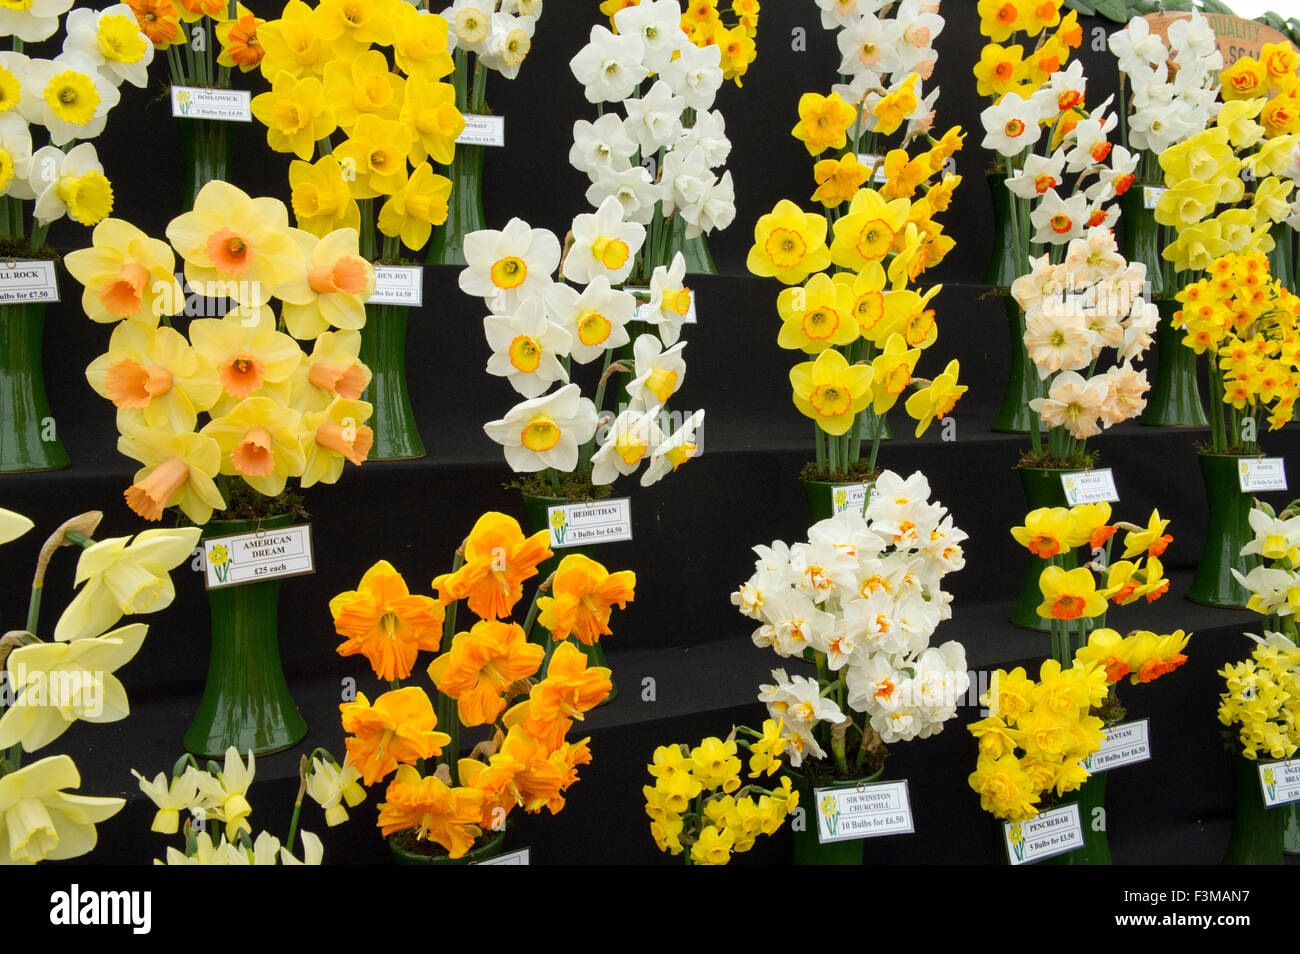 Cornwall Gesellschaft Frühling Garten Gartenschau am Boconnoc, Kamelien, Rhododendren, Narzissen, Tulpen usw.a UK Blumen Pflanzen zeigen Stockfoto